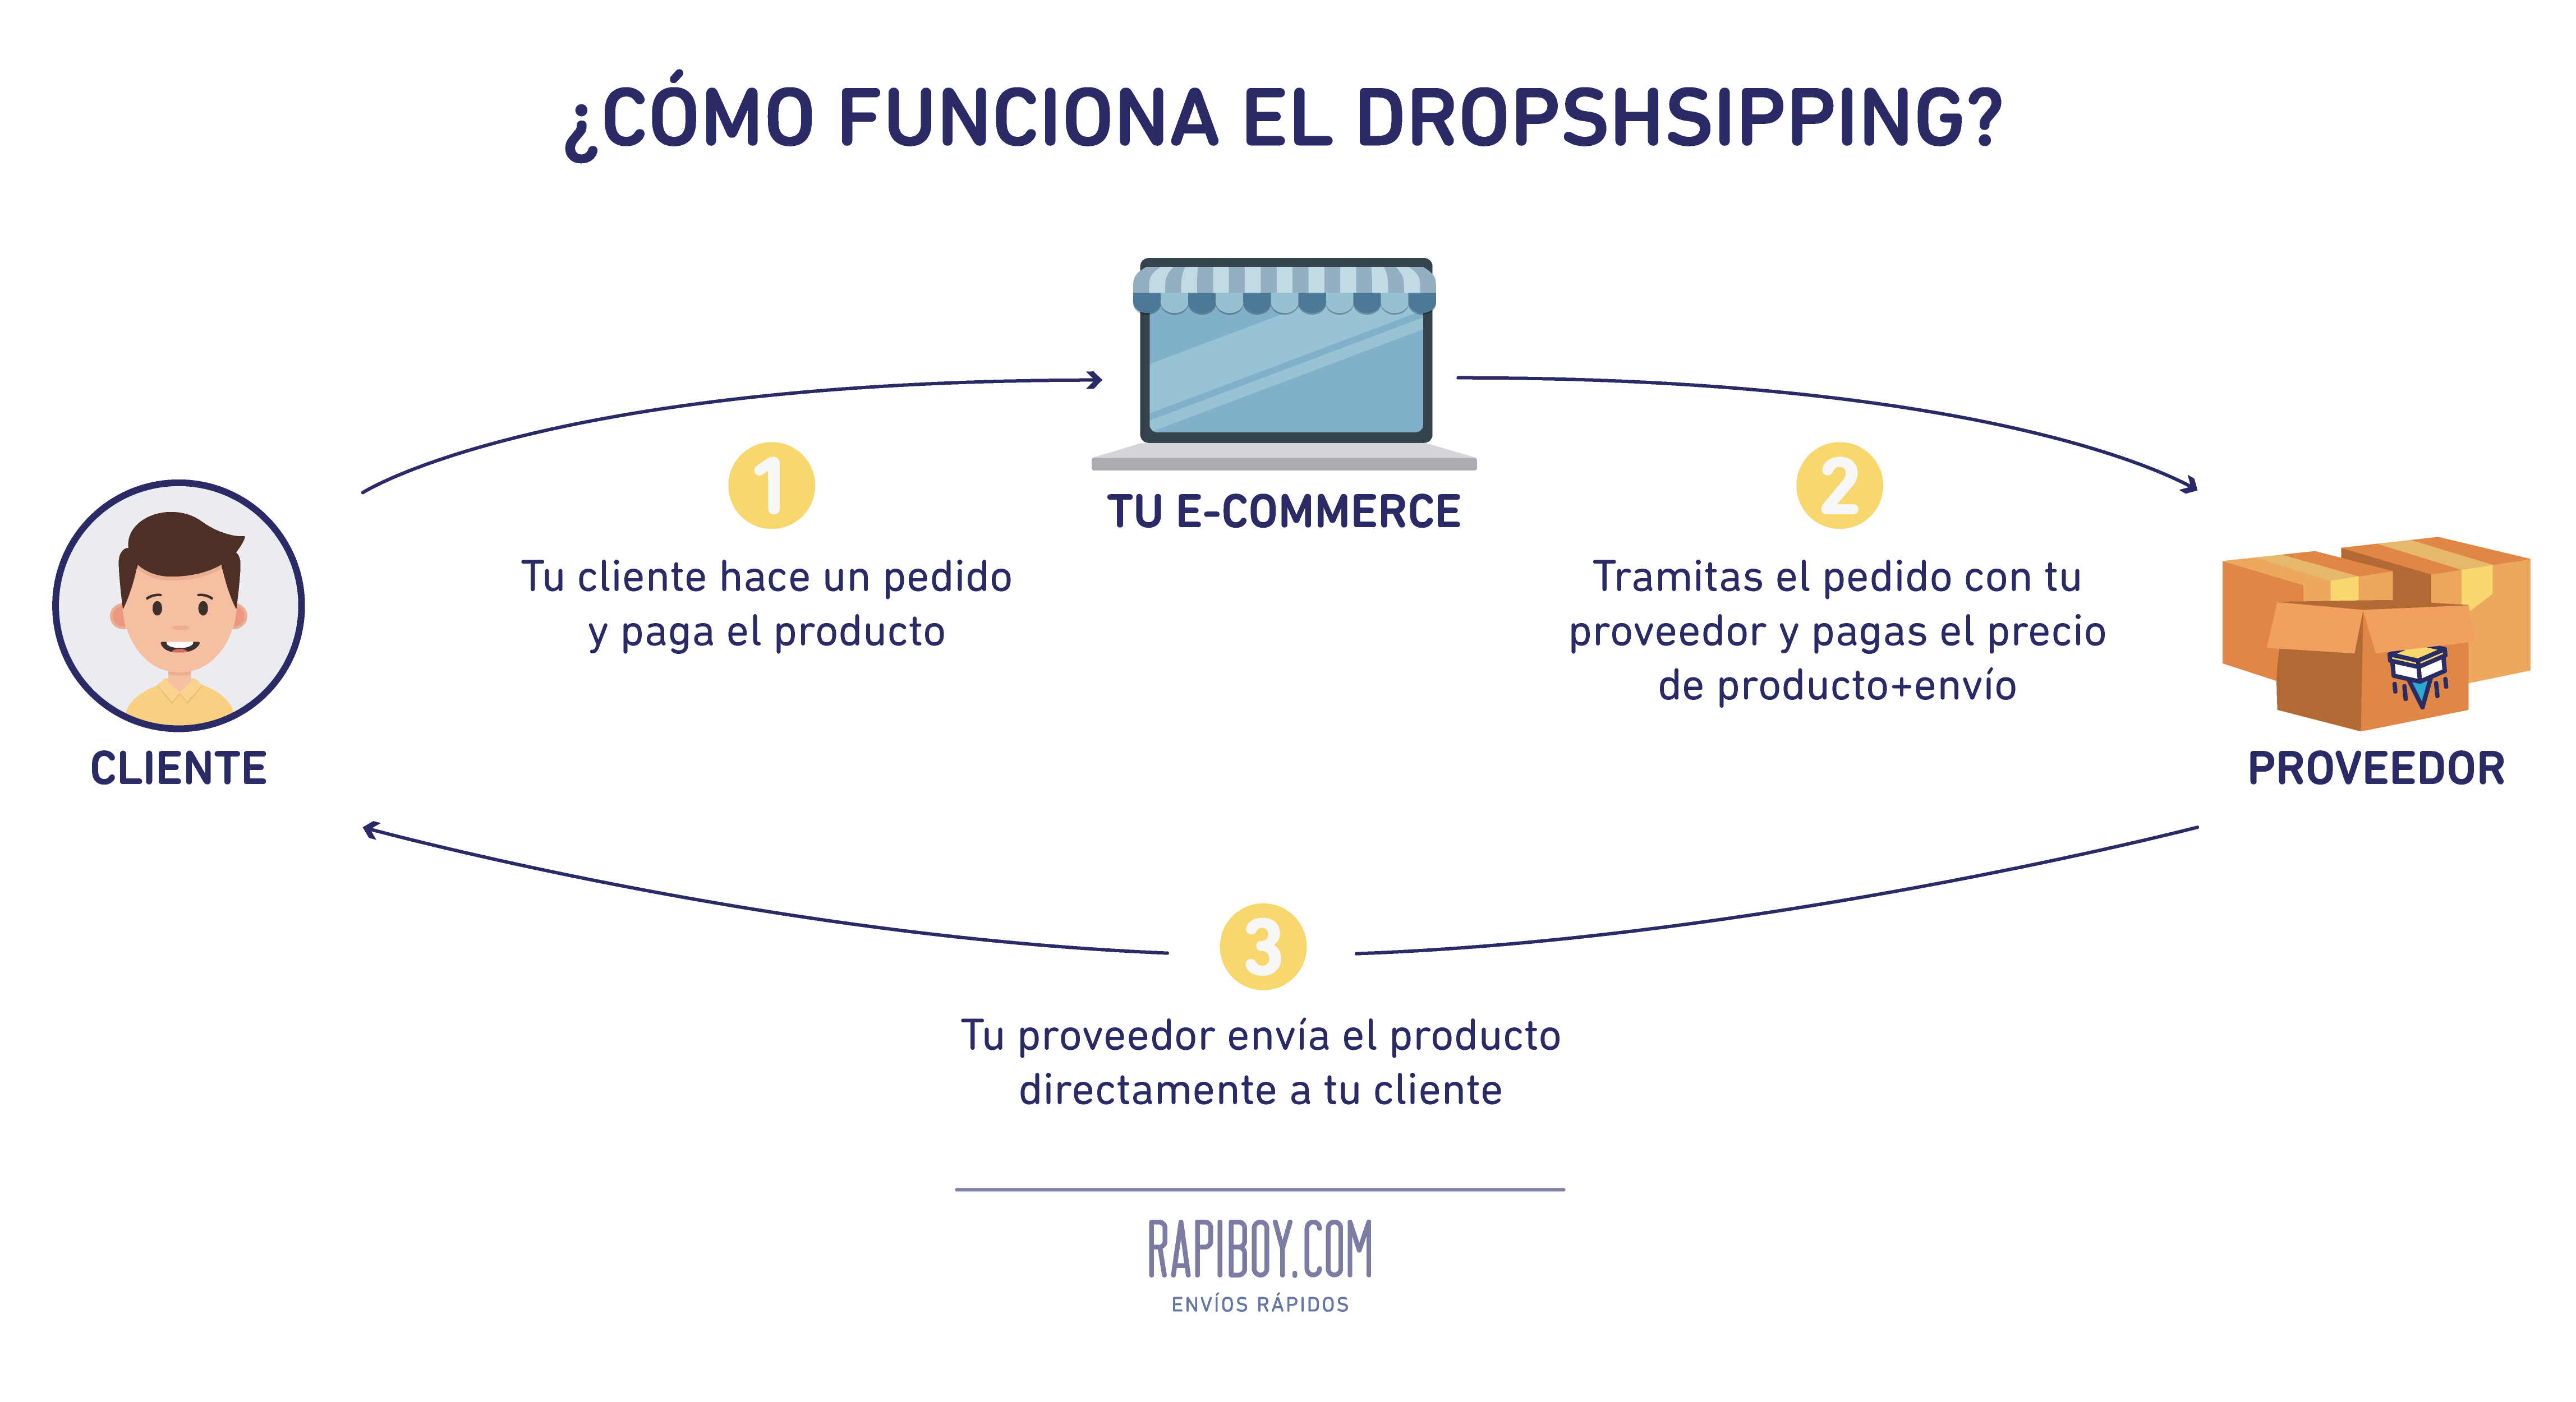 rapiboy esquema de funcionamiento del modelo dropshipping para ecommerce